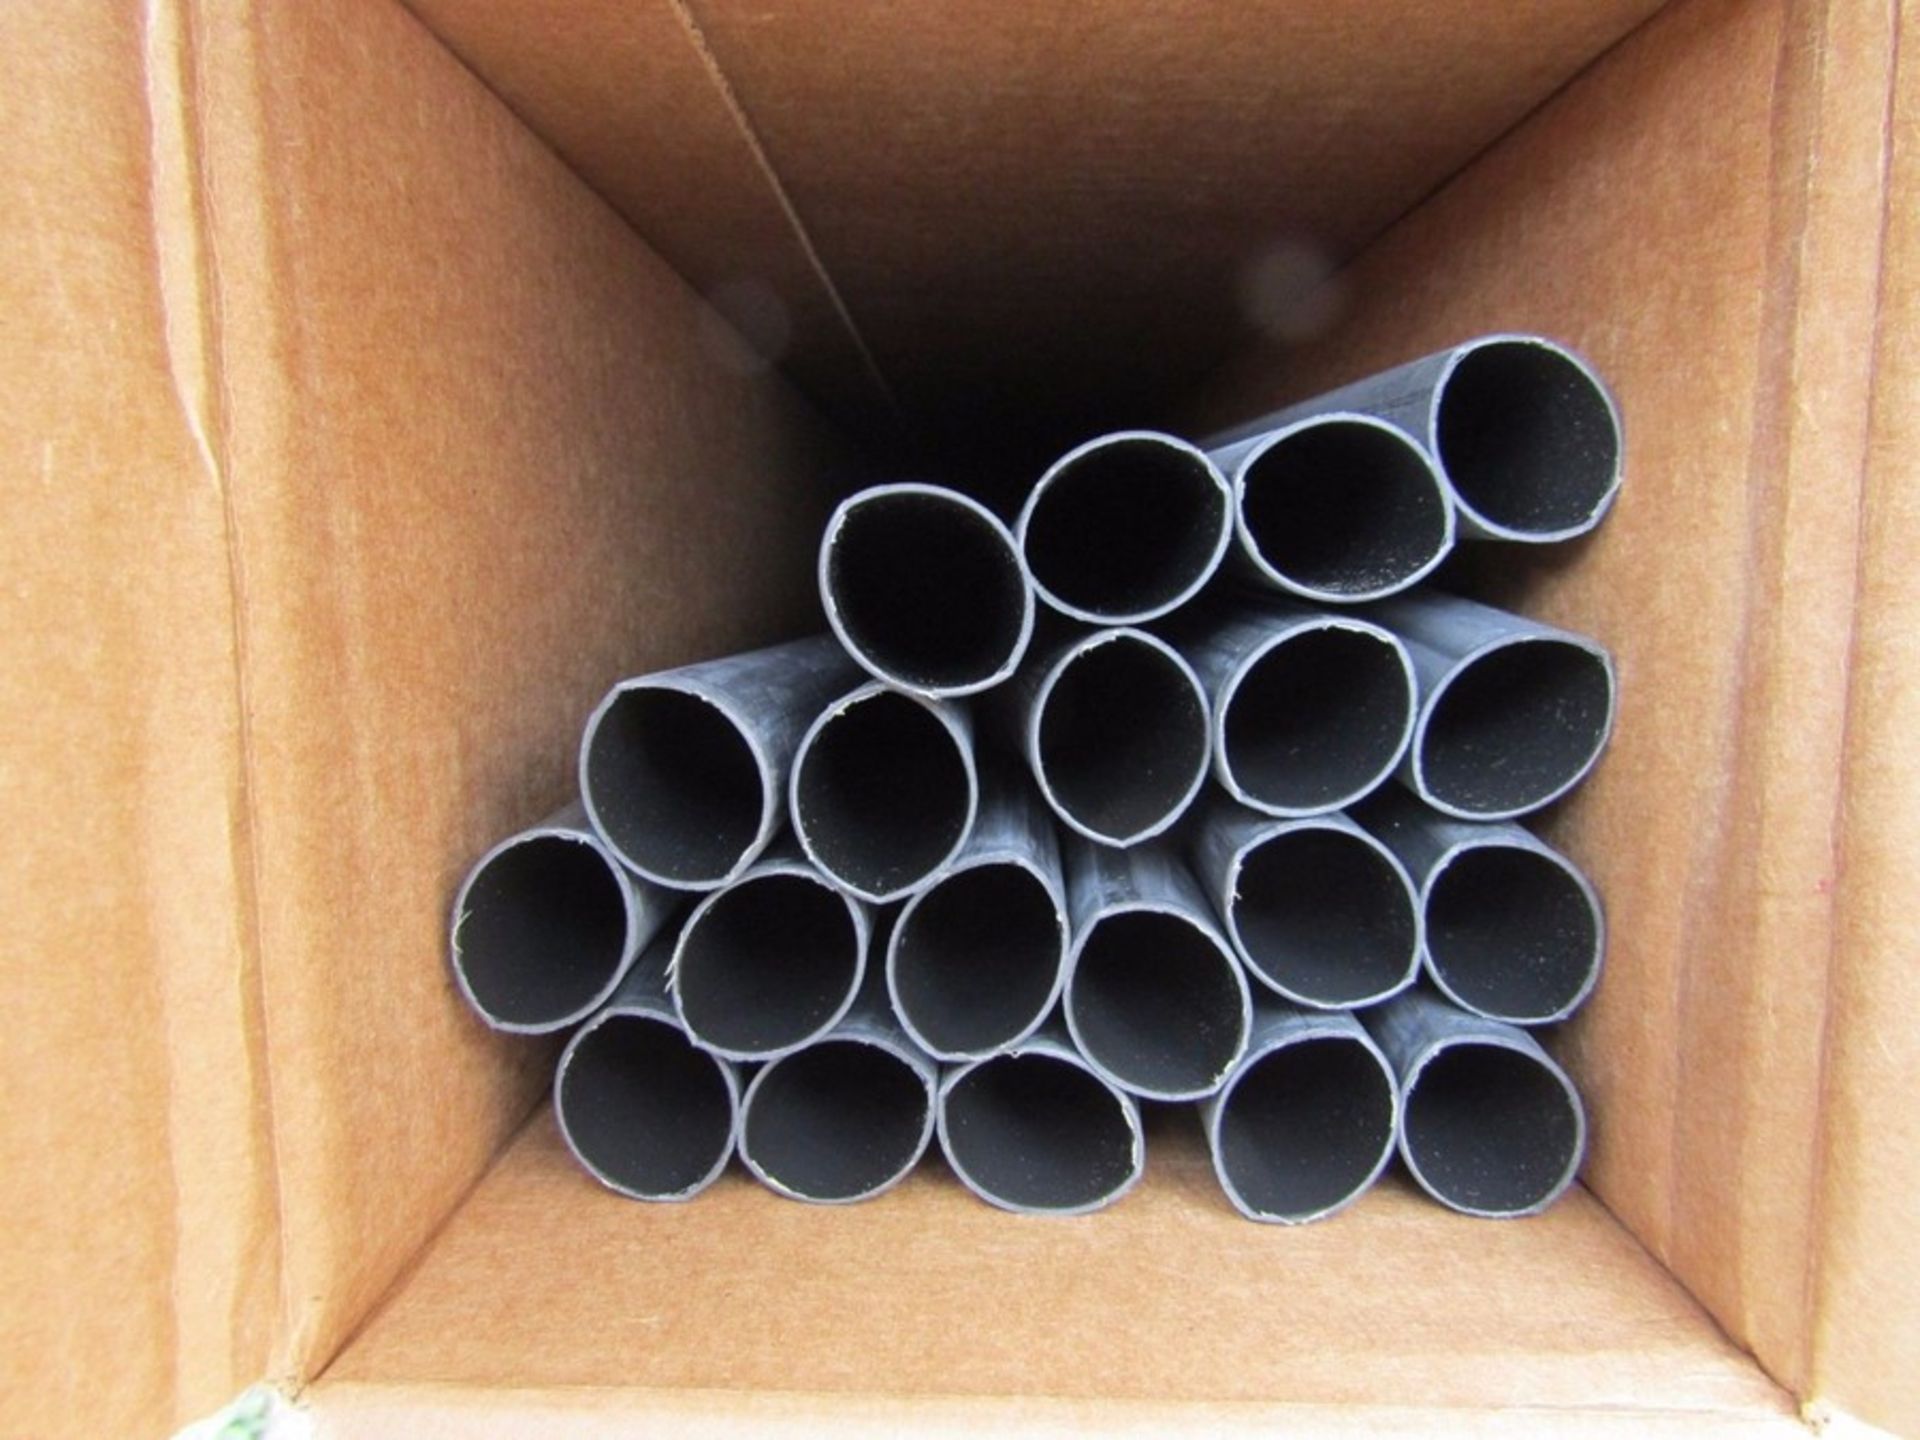 BOX of 20 x 3M Black Heat Shrink Tubing 3:1 20.3mm Dia x 1.219m - 1005 8373299 - Image 2 of 4